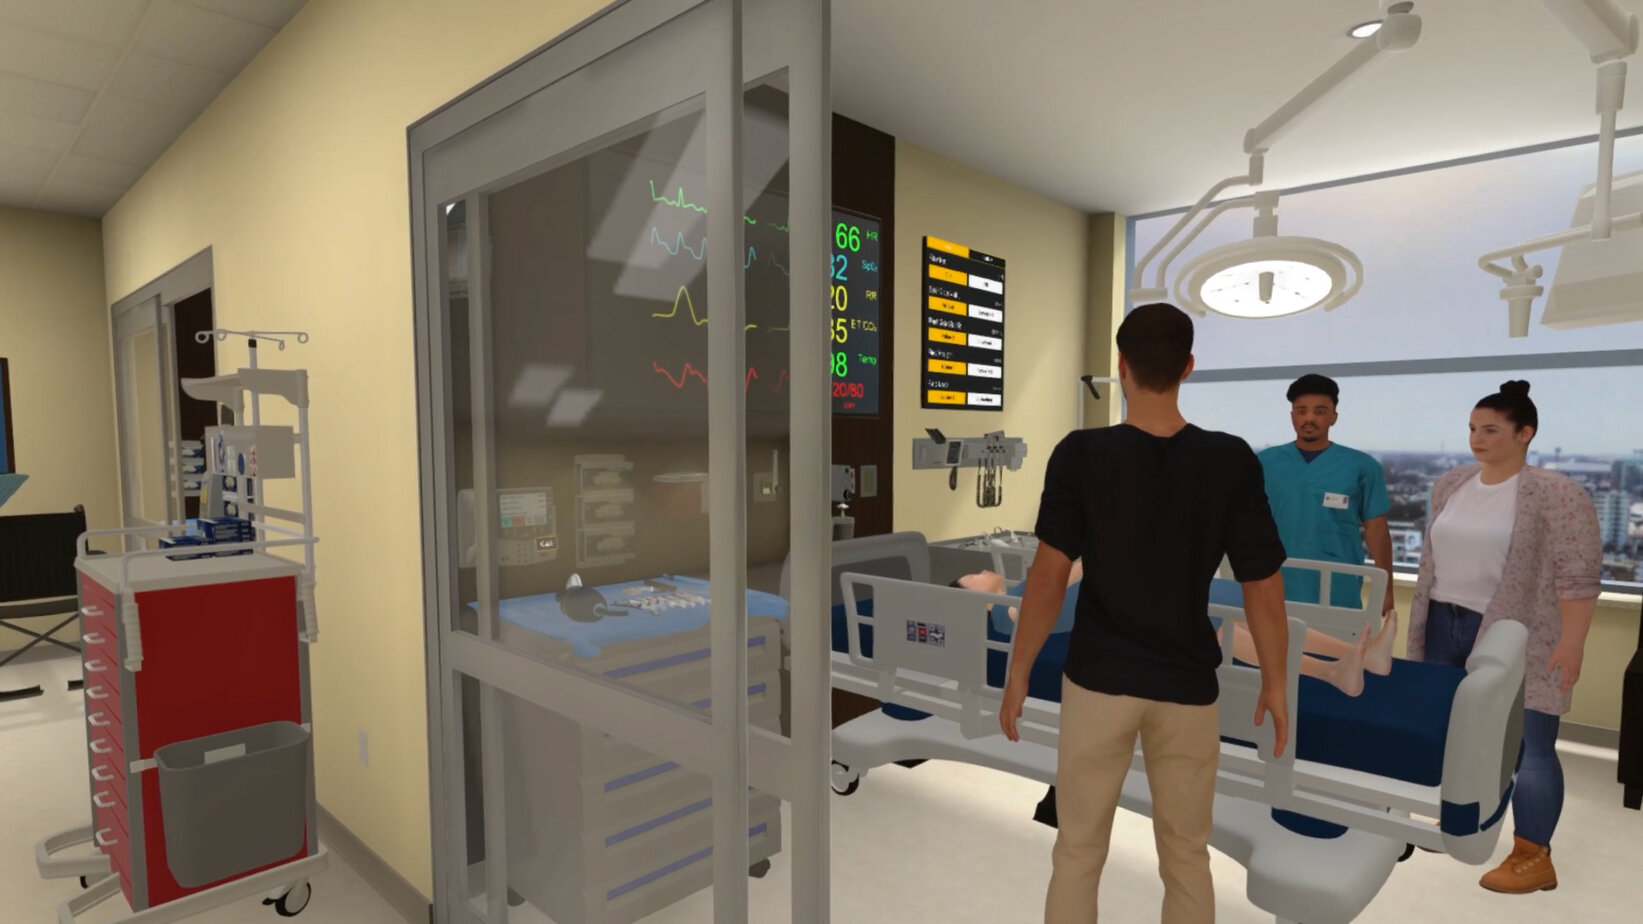 VR simulation environment